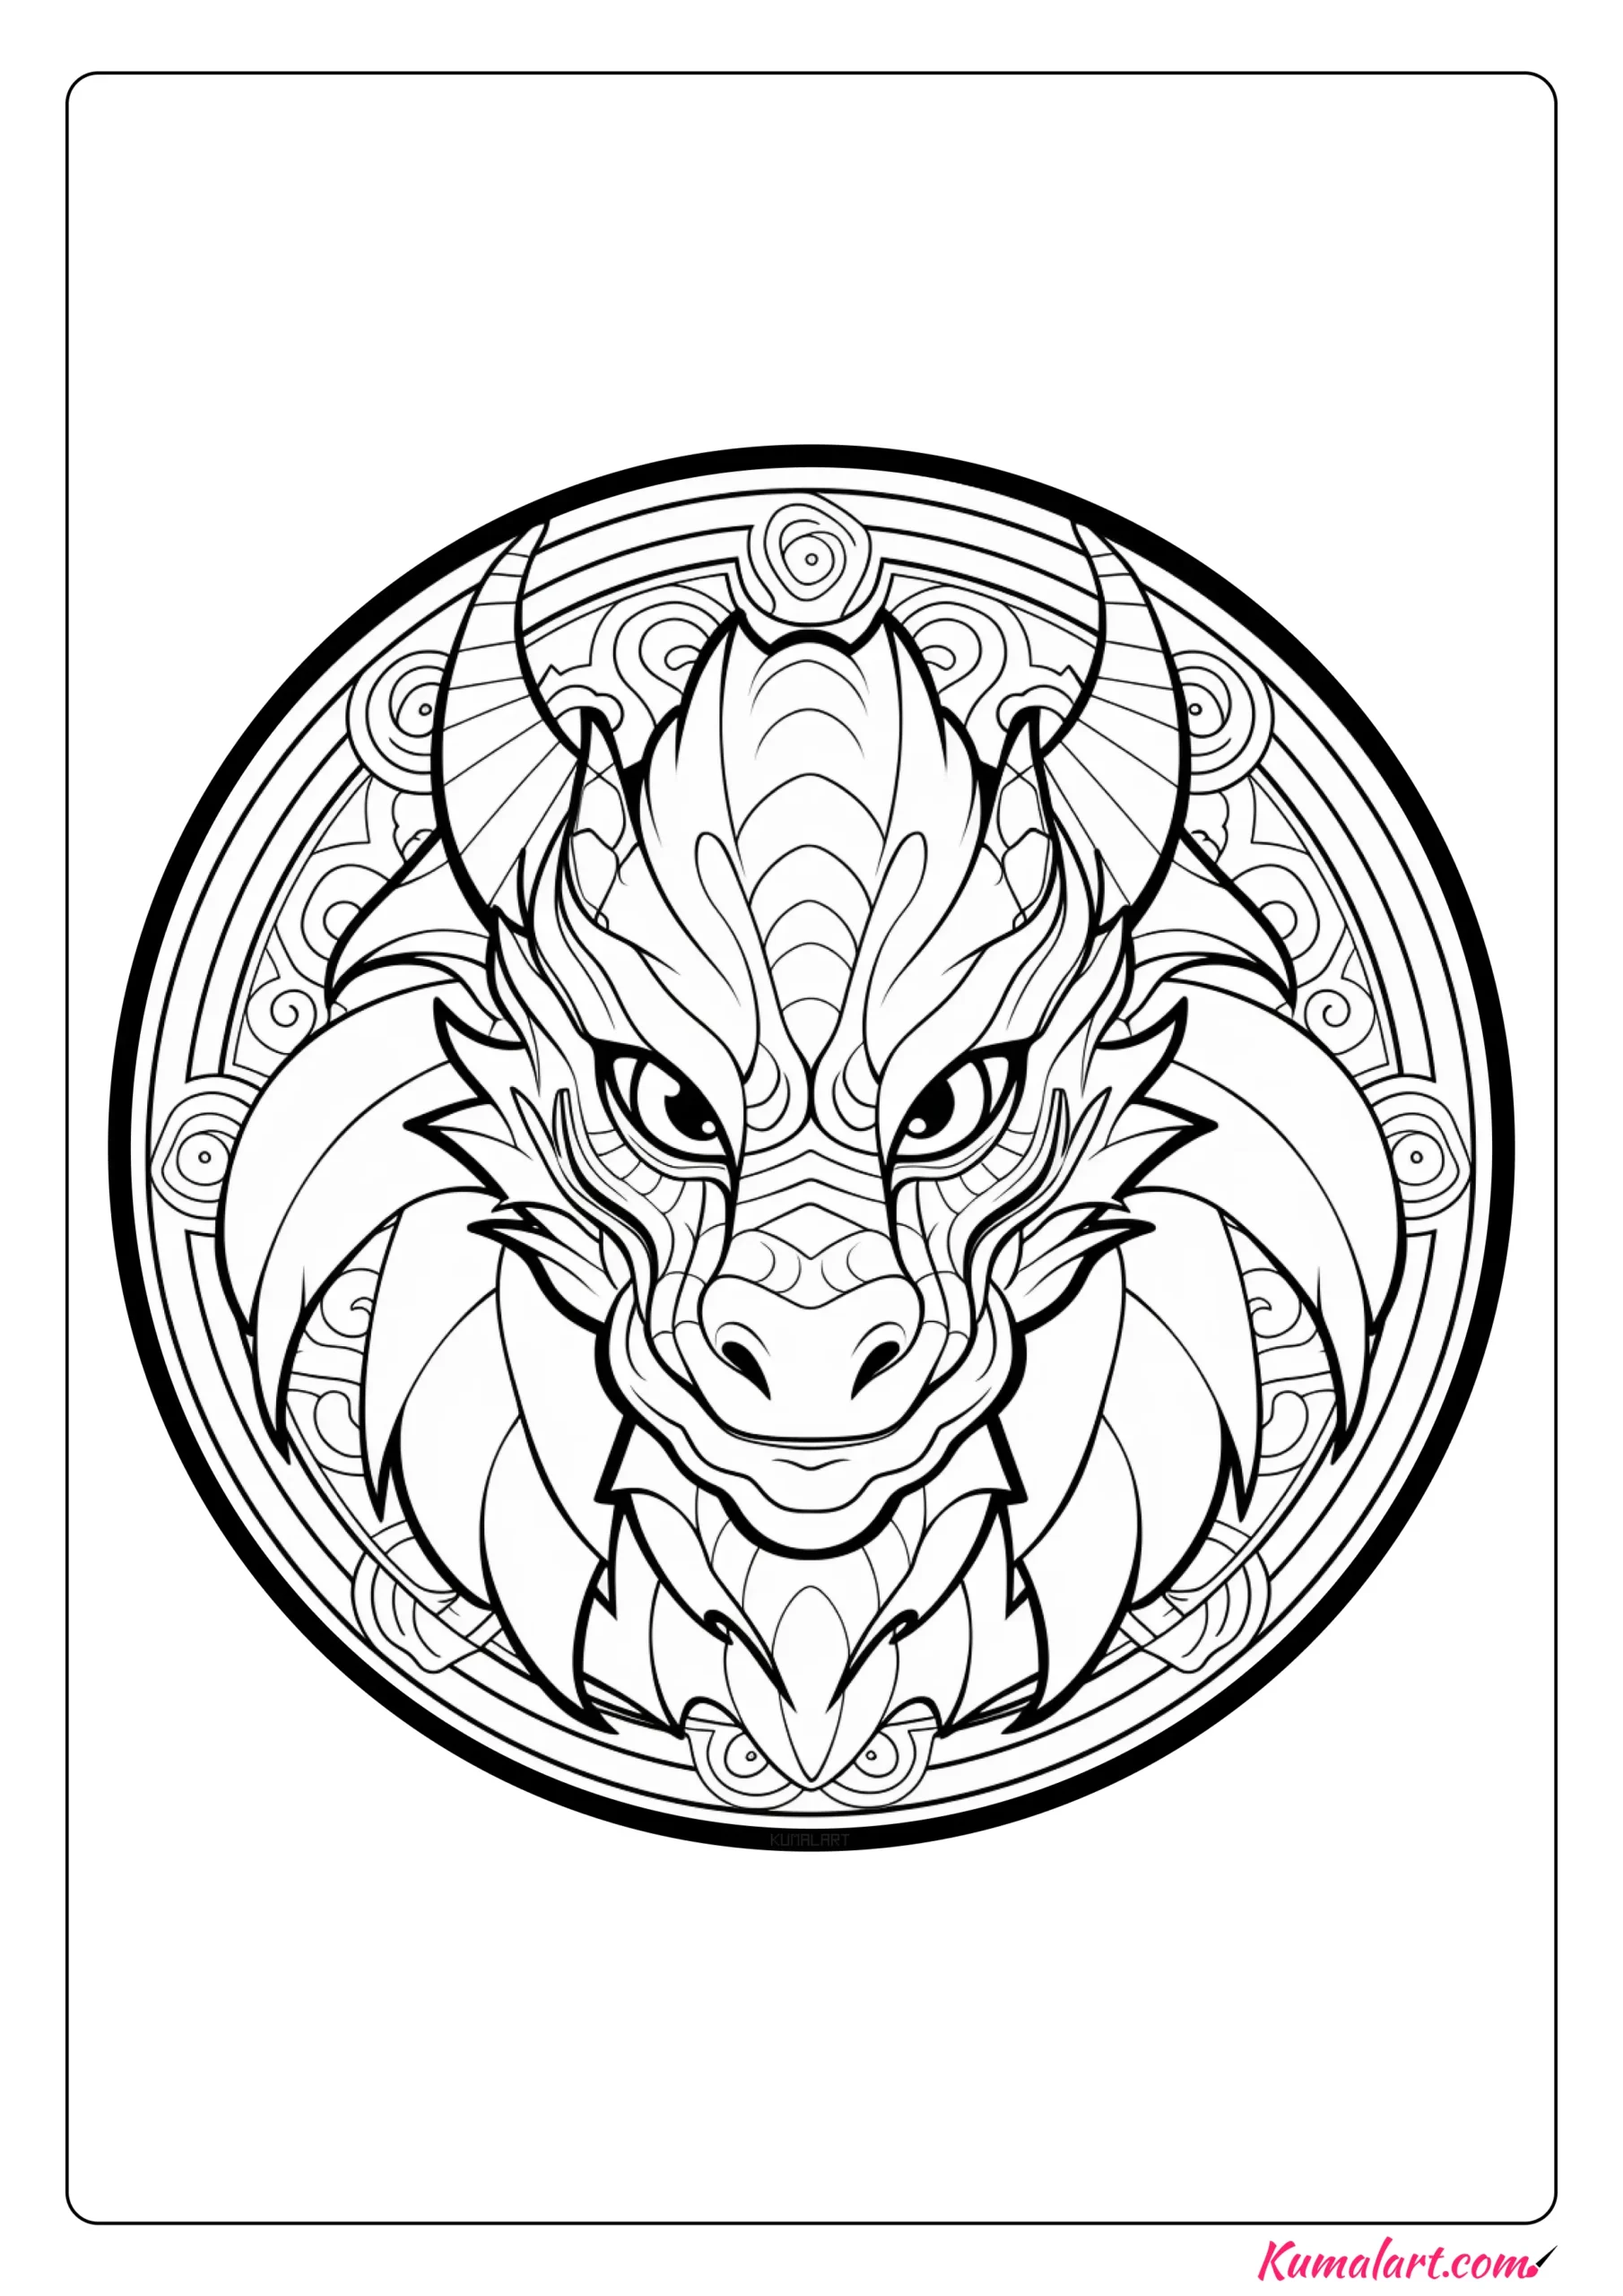 Peter the Dragon Mandala Coloring Page